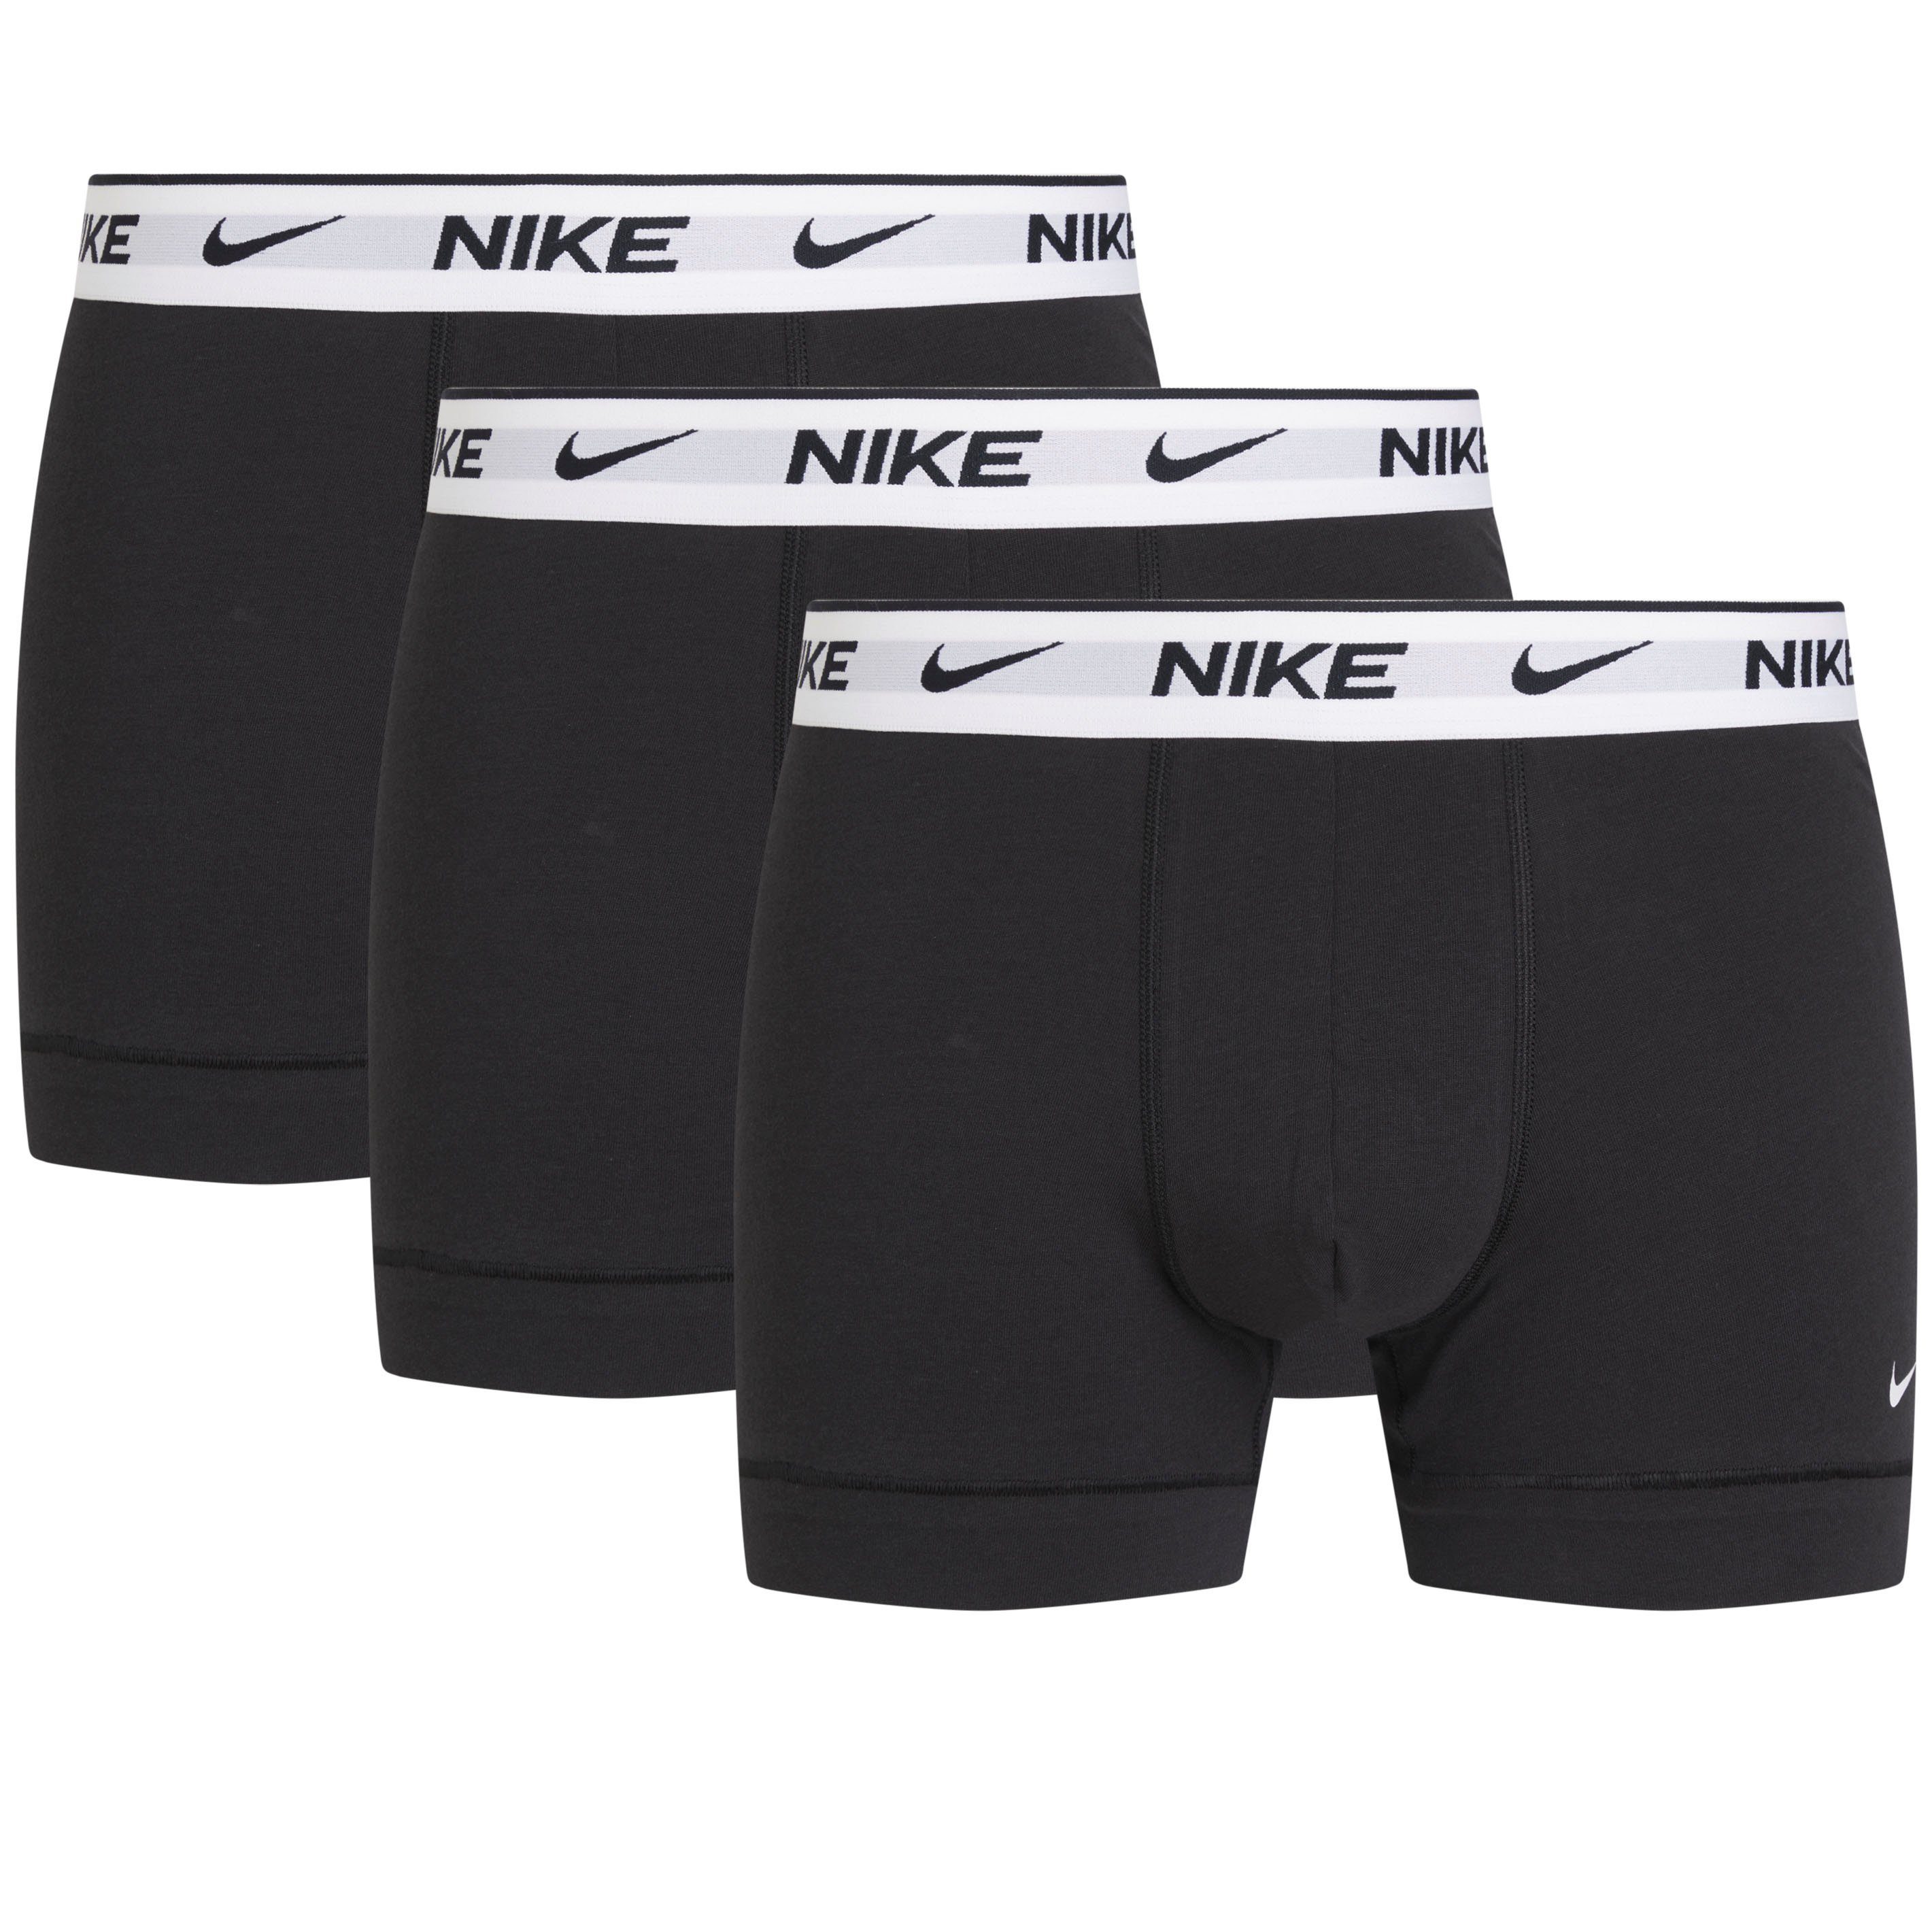 NIKE Underwear Trunk Nike Dri-FIT Essential Cotton Stretch met logo op de tailleband (3 stuks, Set v